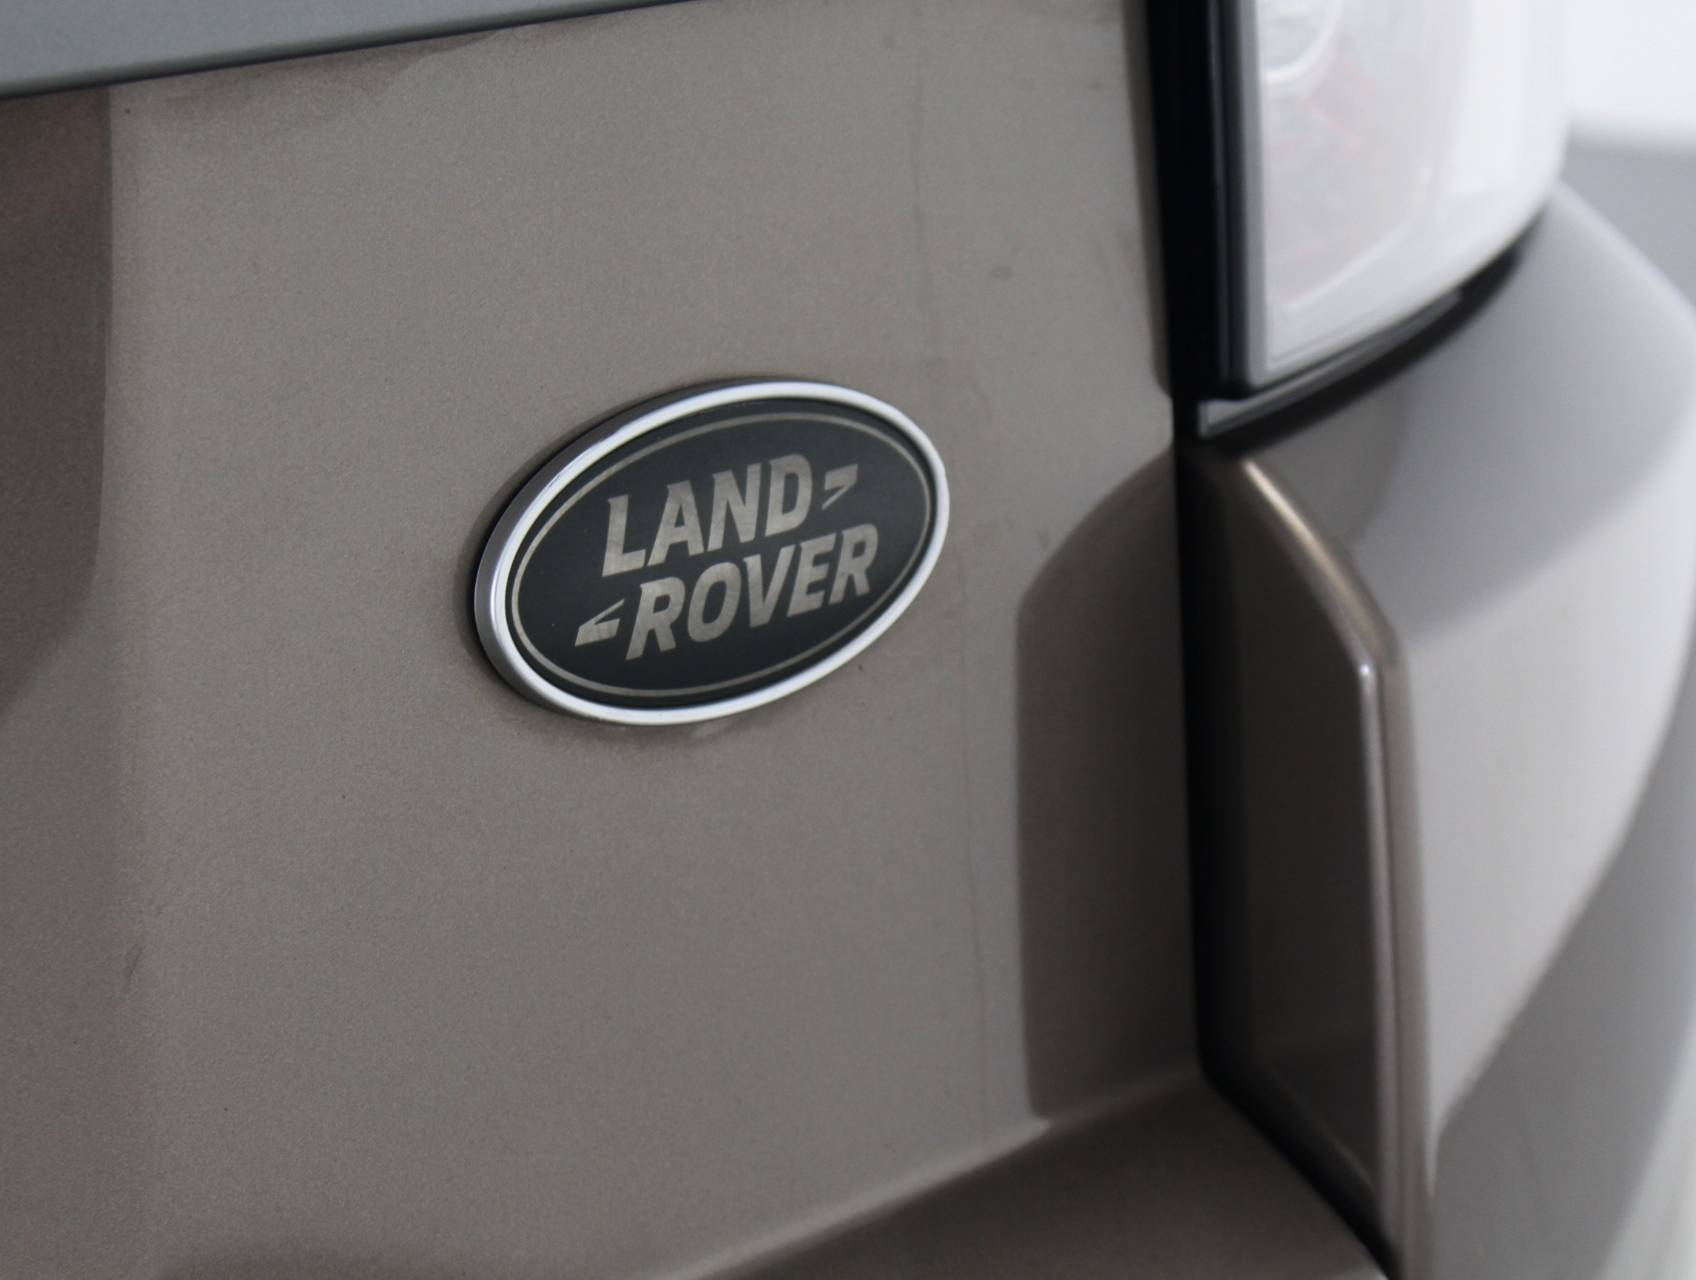 Florida Fine Cars - Used LAND ROVER RANGE ROVER EVOQUE 2015 MIAMI PURE PLUS